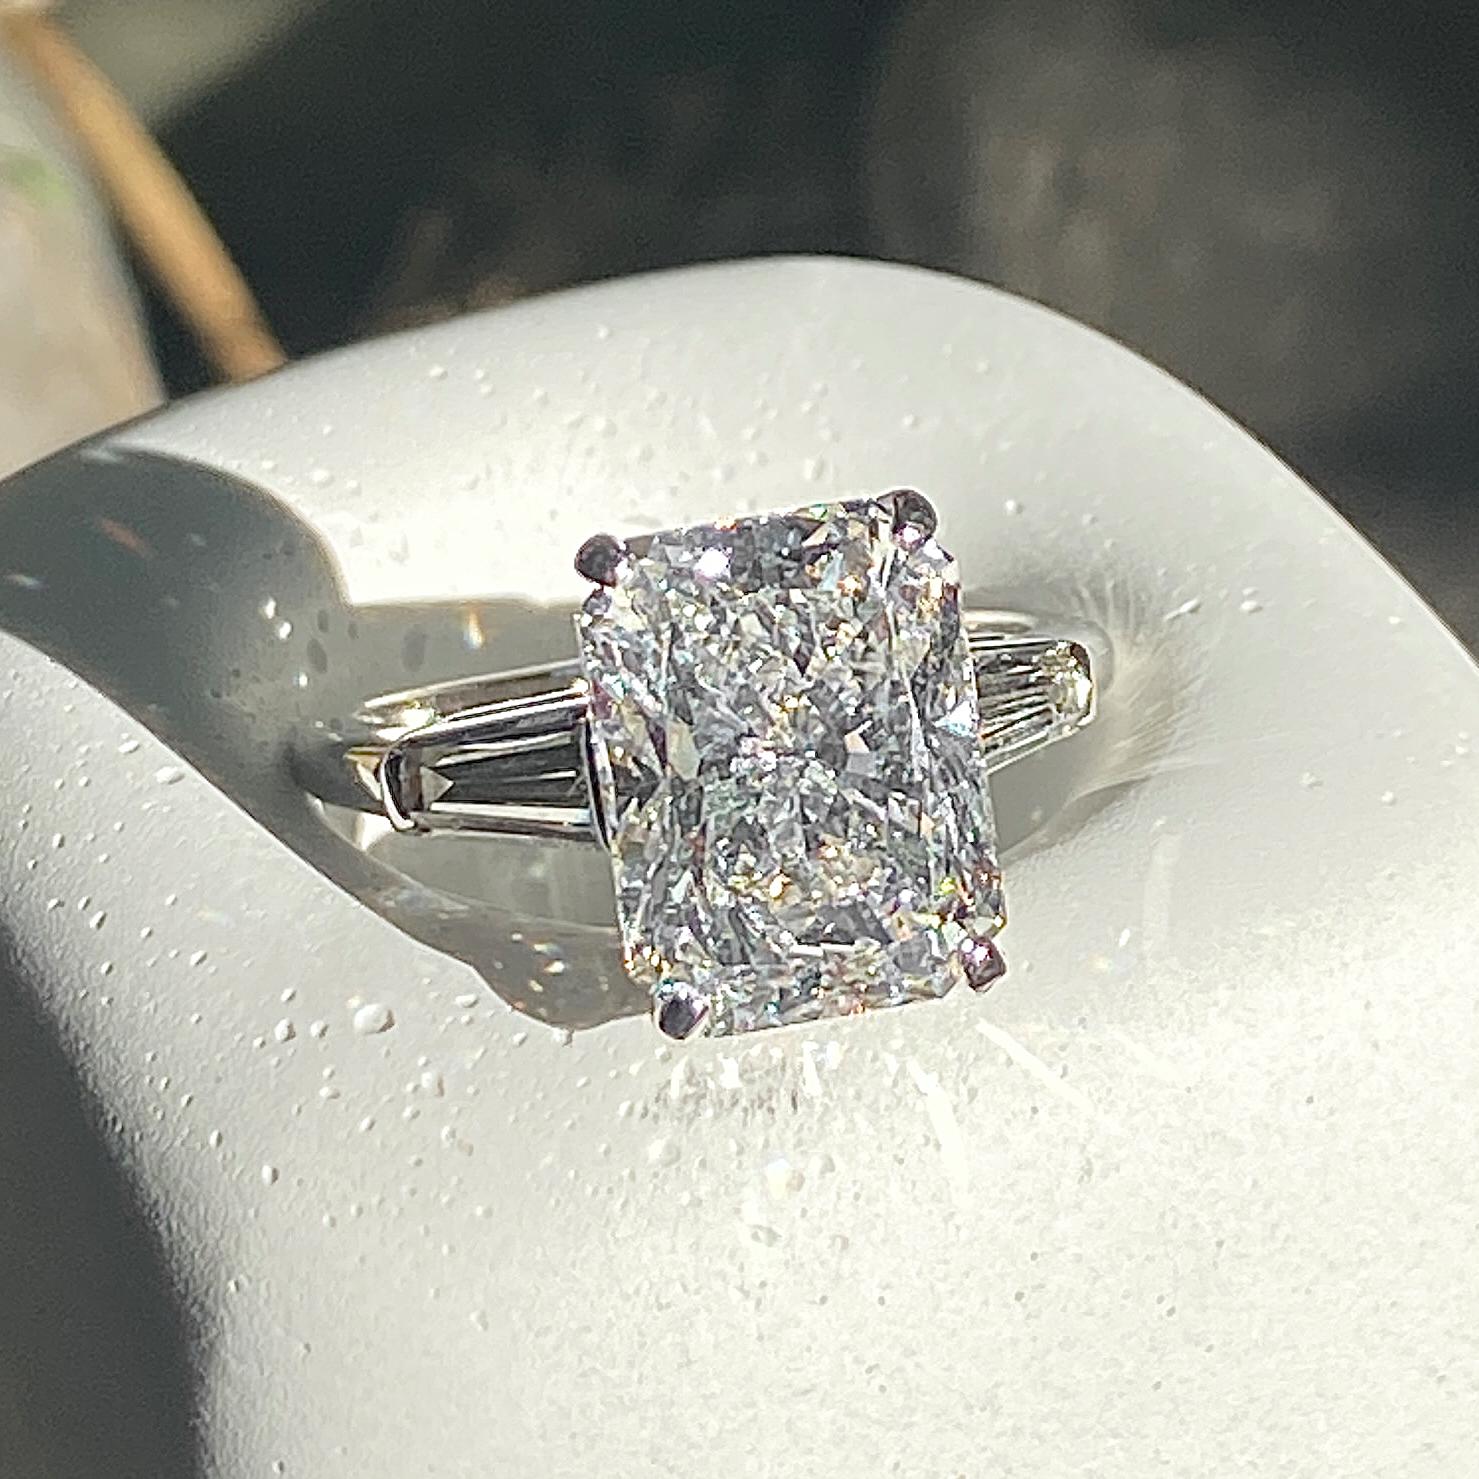 4.06 Carat E-VVS1 GIA Certified Radiant Cut Diamond in Deco-Era Platinum Ring 5